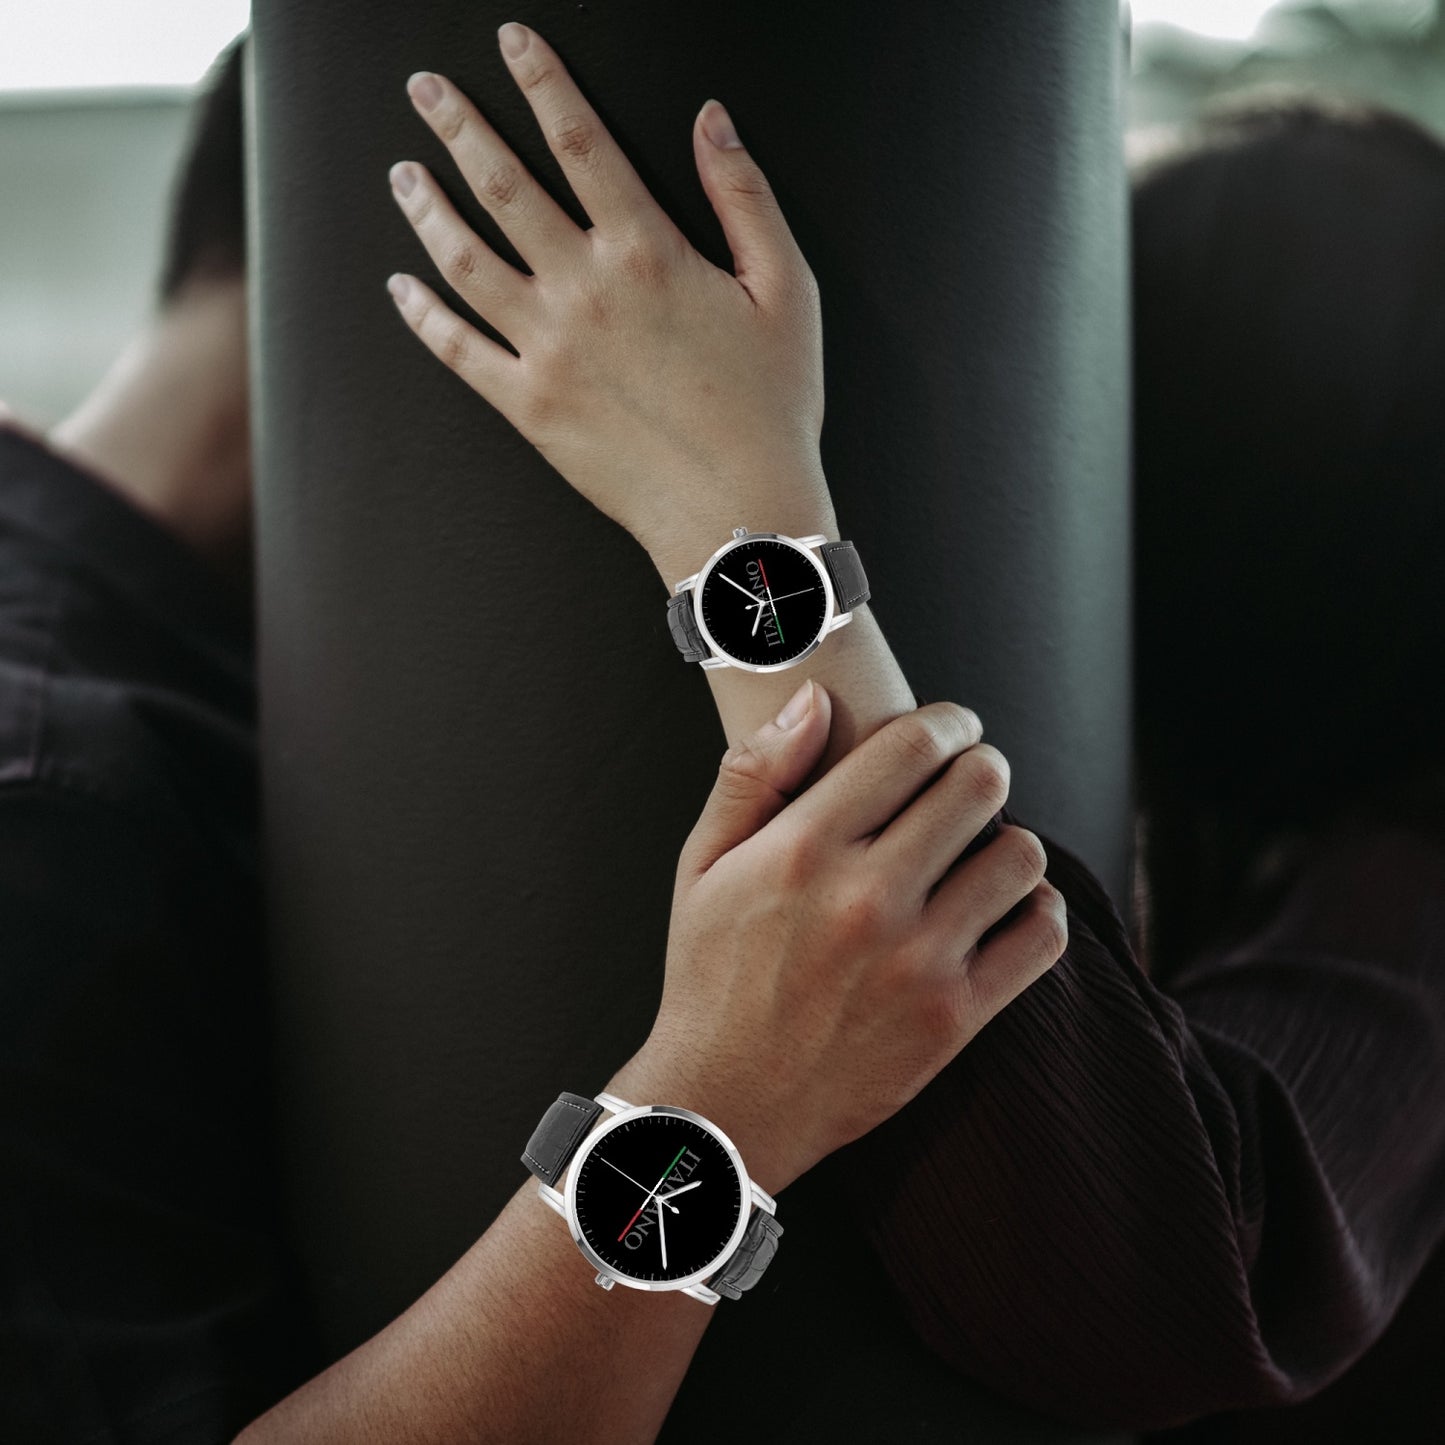 Premium SEIKO Quartz watch Movement - ITALIANO